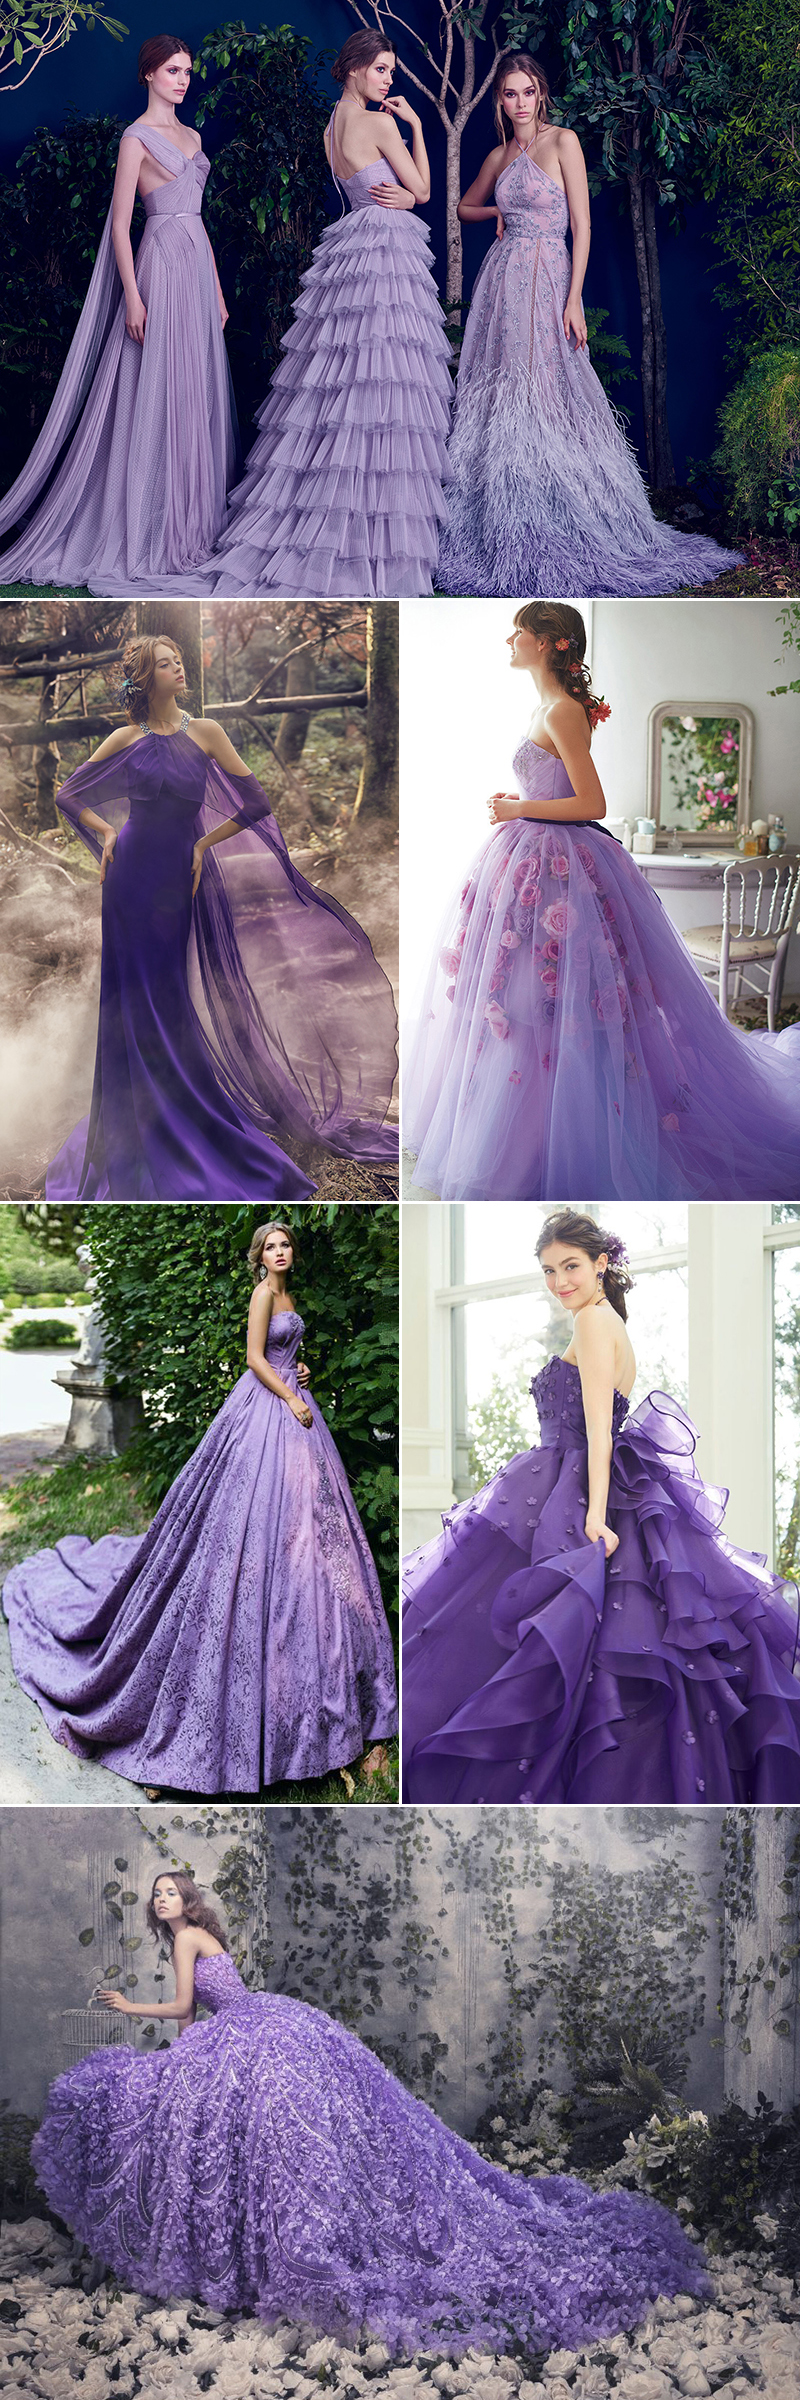 a purple wedding dress